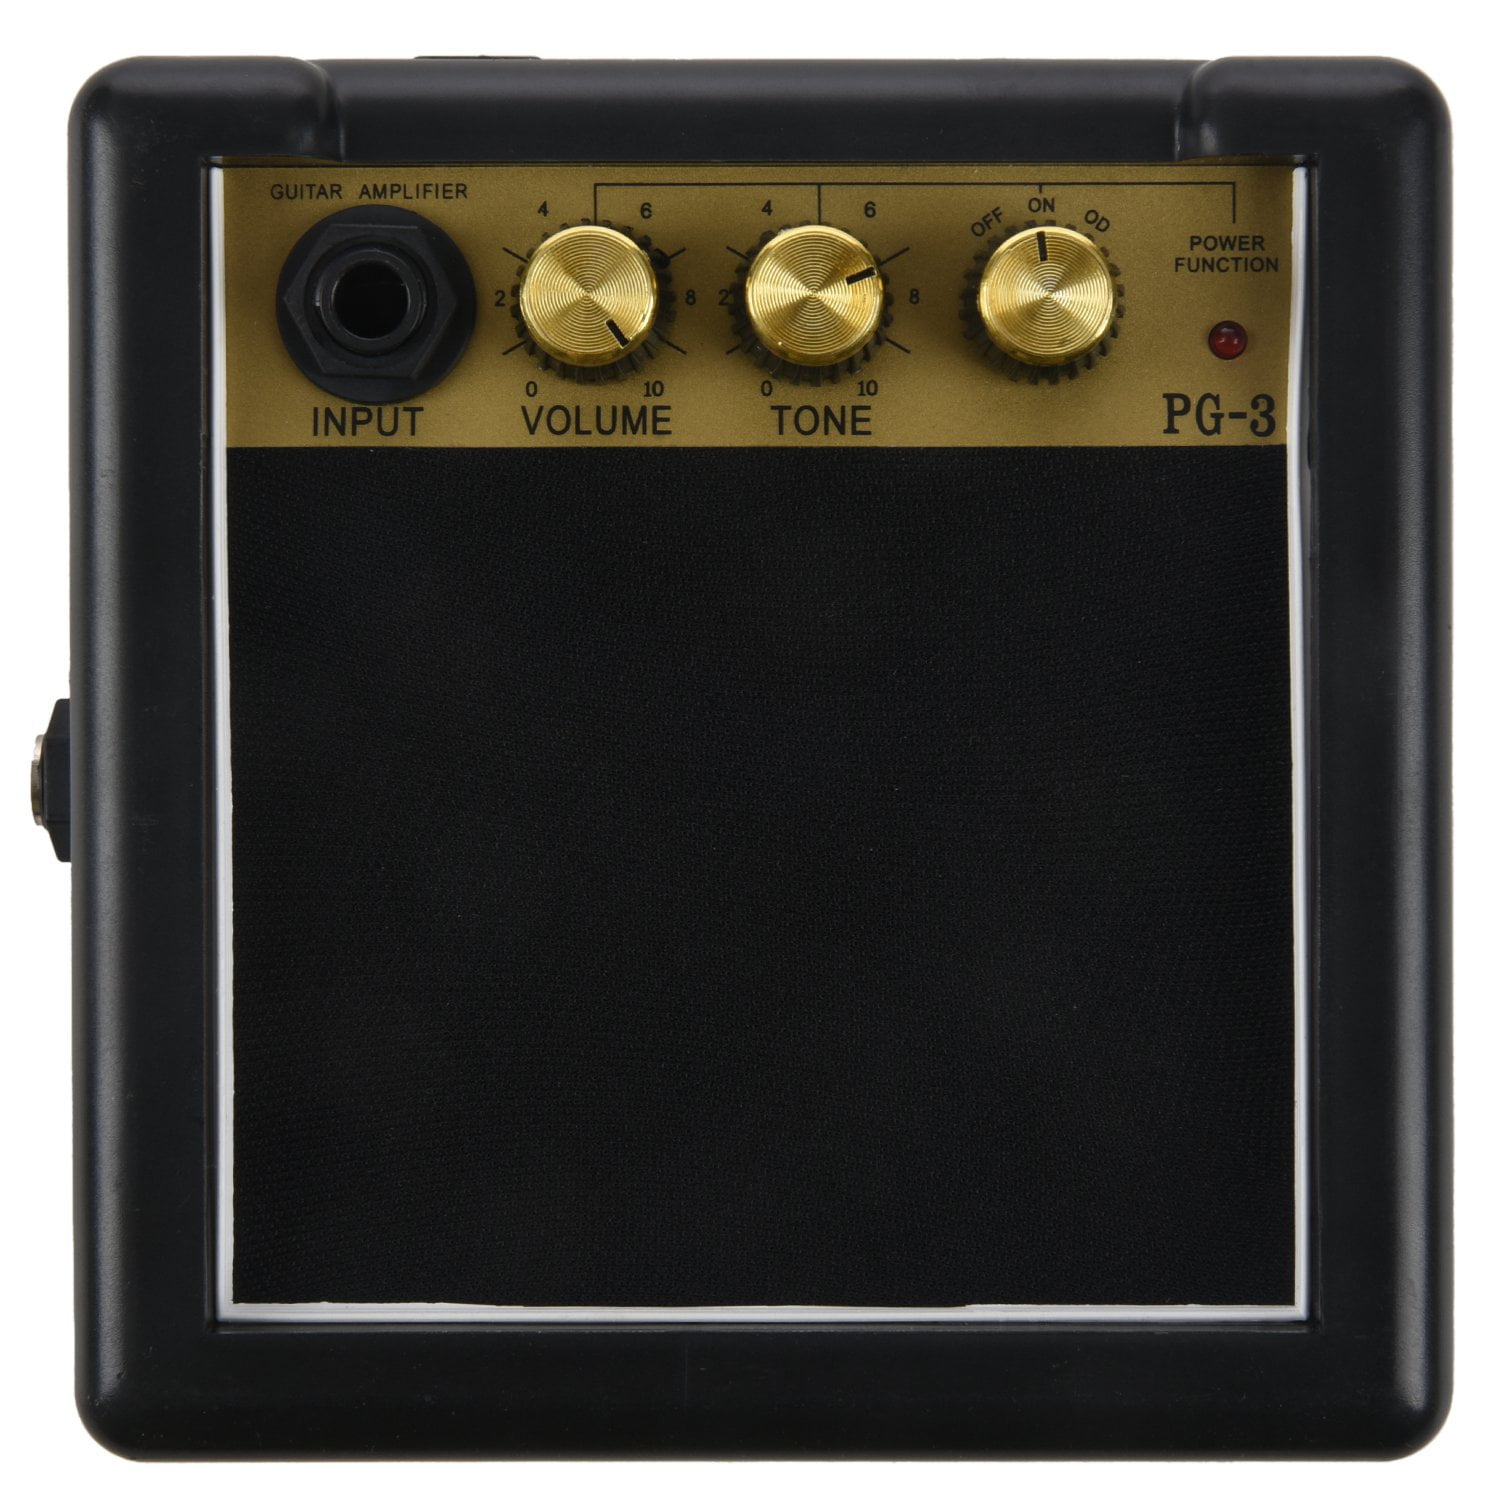 Portable Mini Bass Amplifier Guitarra AMP Speaker Clip-On Guitar Parts Accessories for Acoustic Electric Guitar PG-3 -